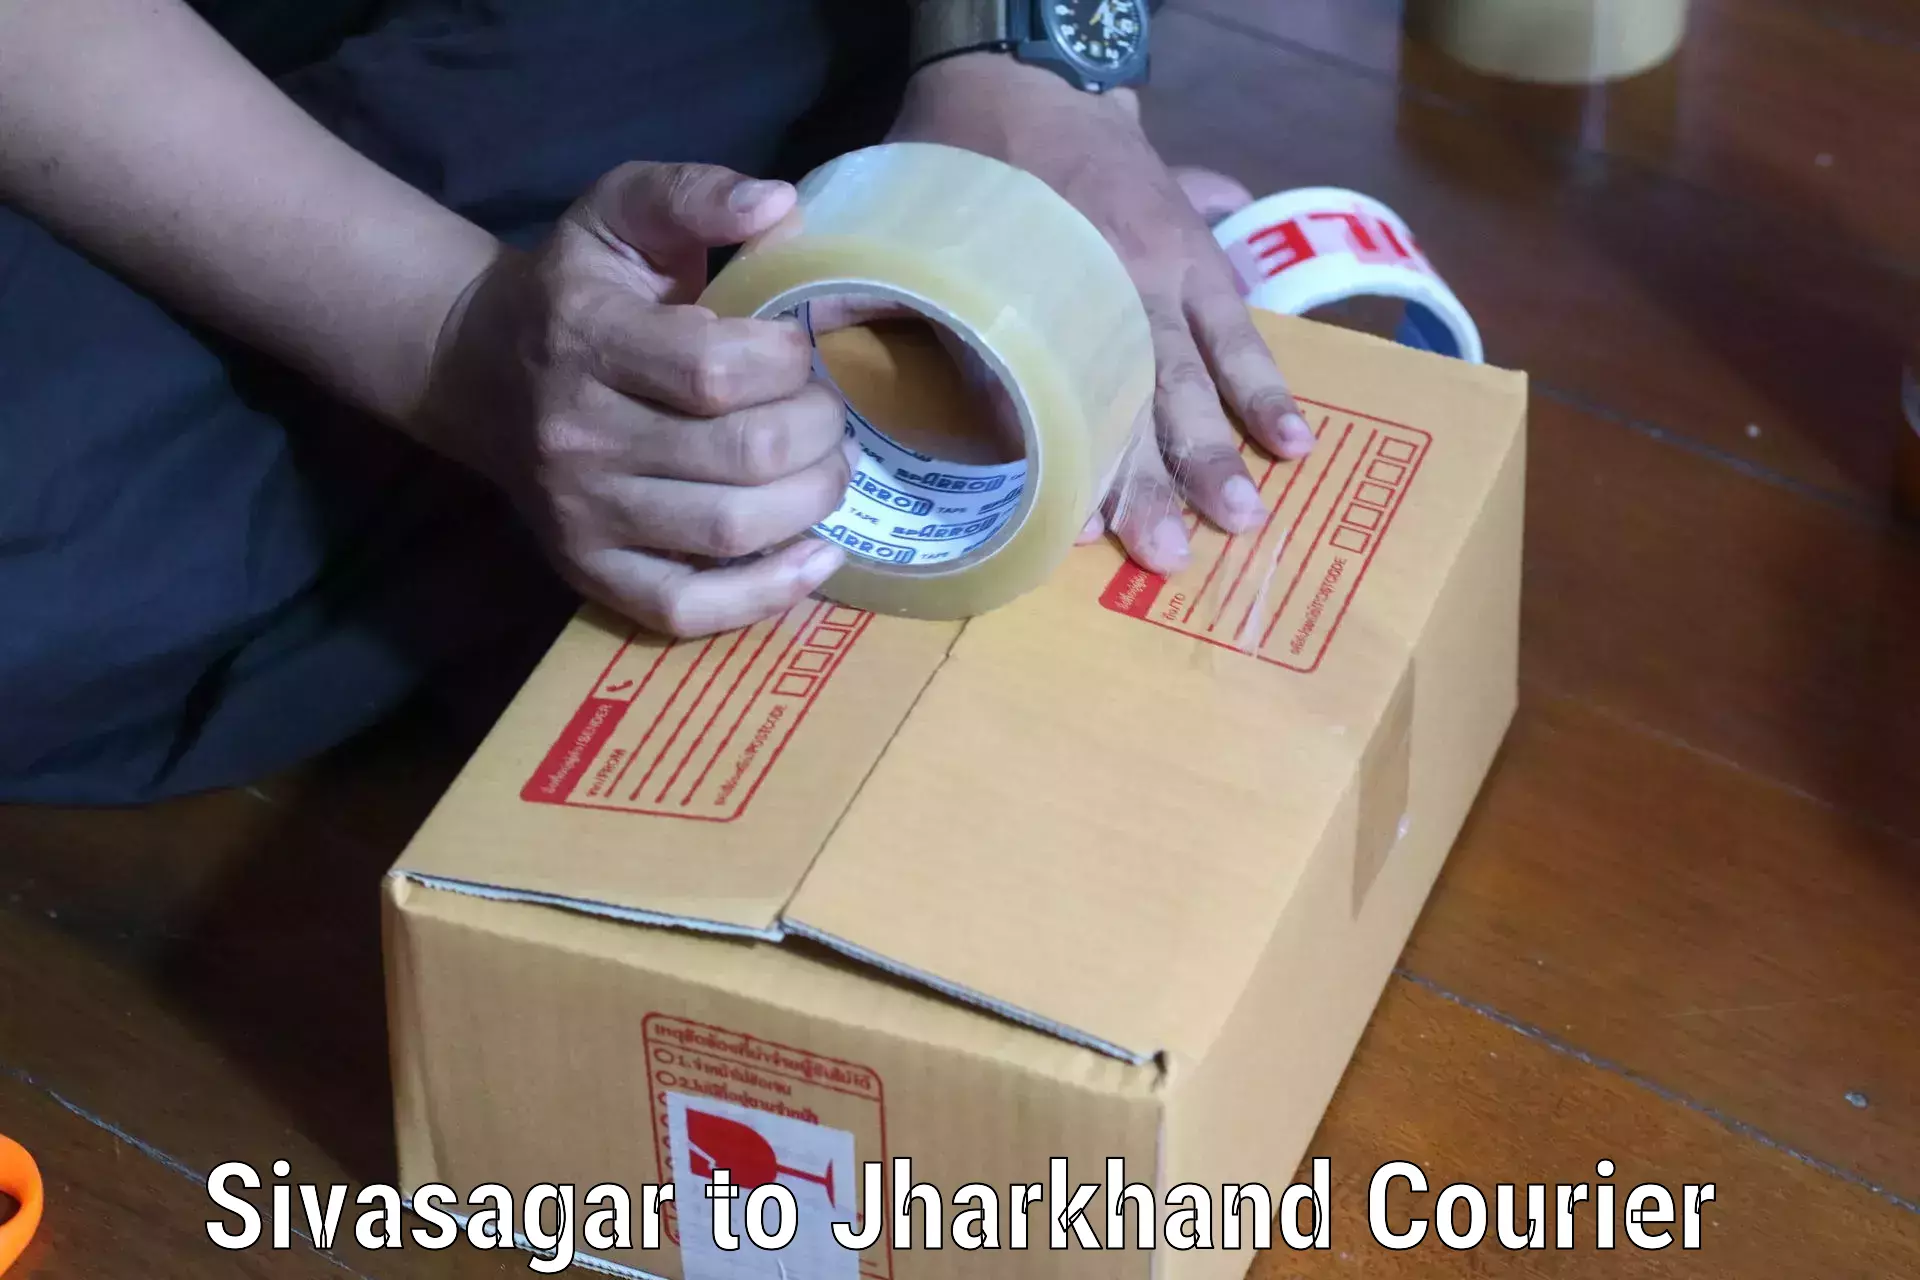 International parcel service Sivasagar to Dhalbhumgarh